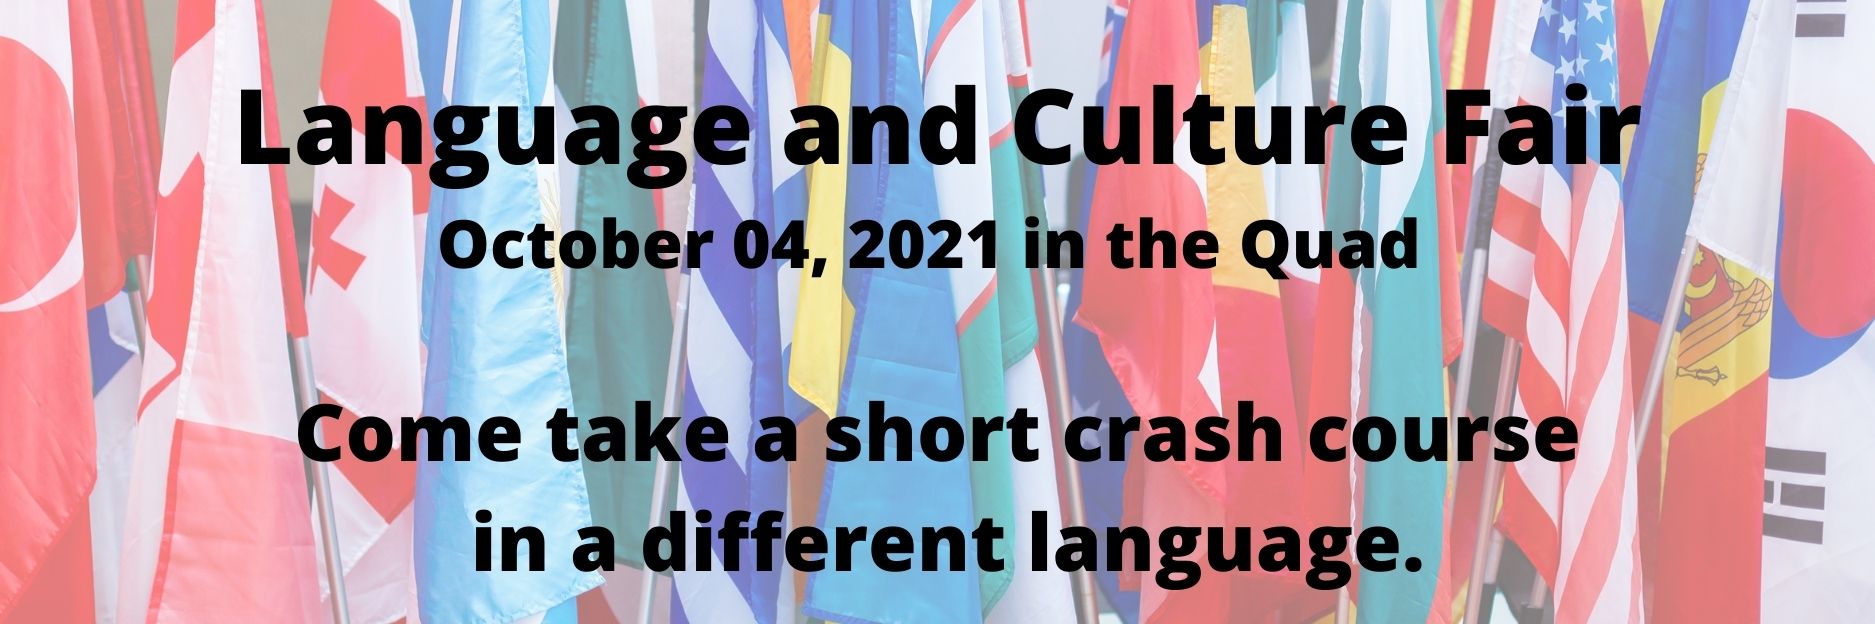 Language and Culture Fair (2)